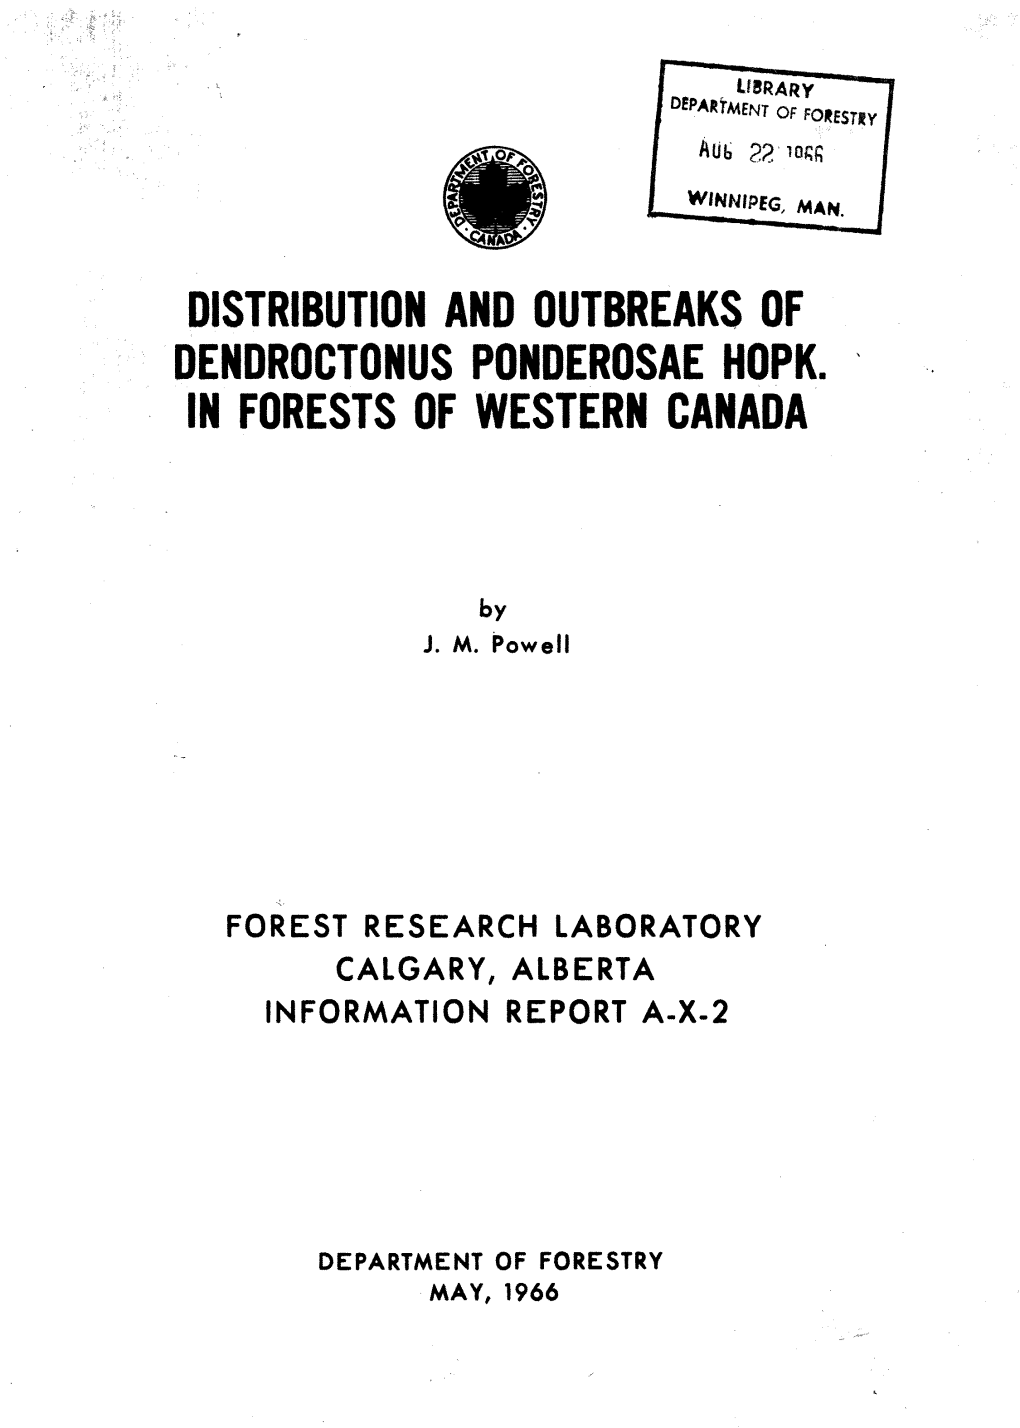 Distribution and Outbreaks of Dendroctonus Ponderosae Hopk